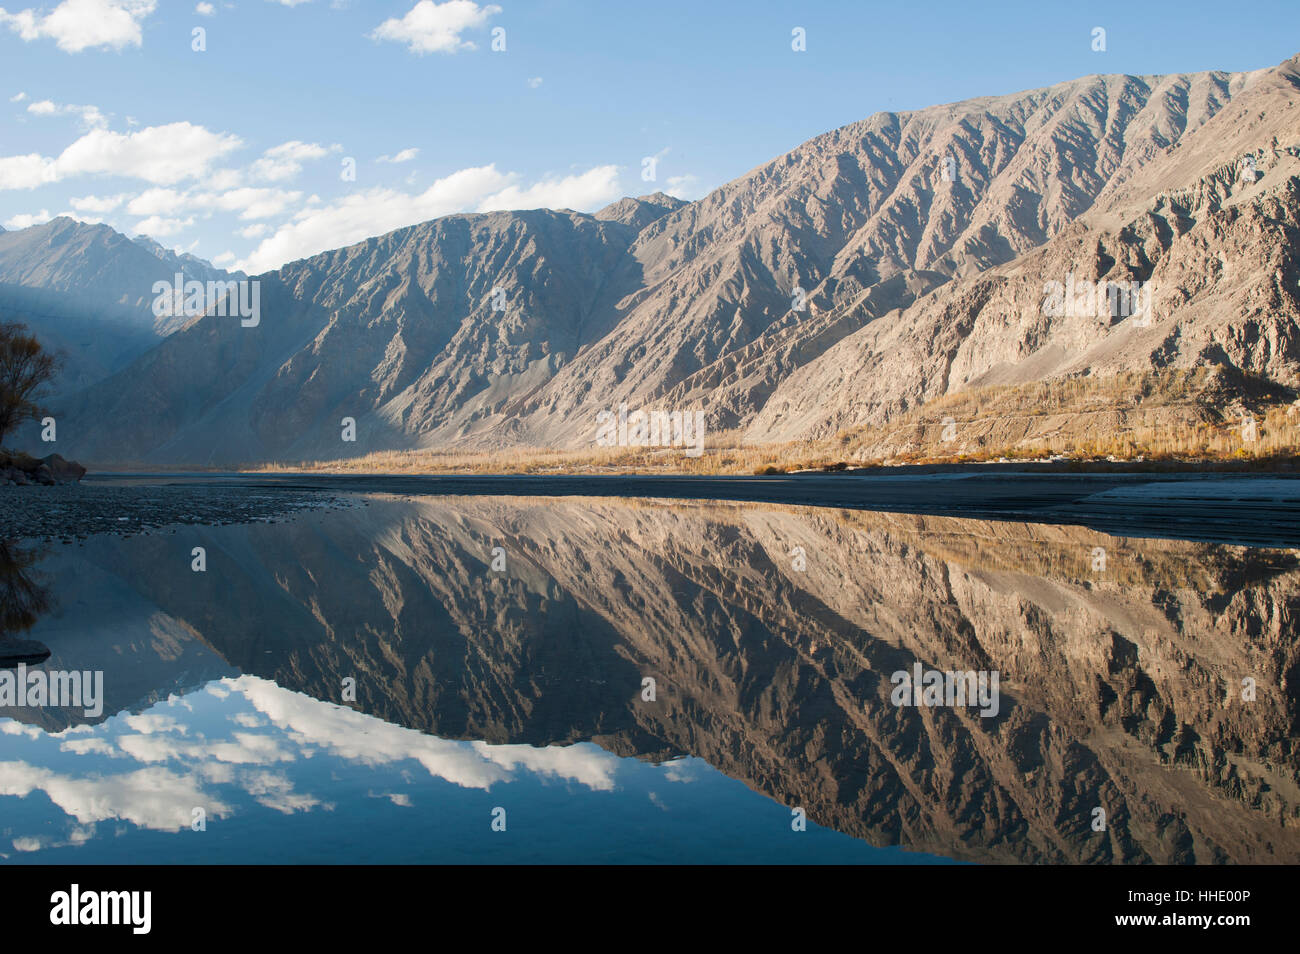 The crystal clear Shyok River creates a mirror image in the Khapalu valley near Skardu, Gilgit-Baltistan, Pakistan Stock Photo